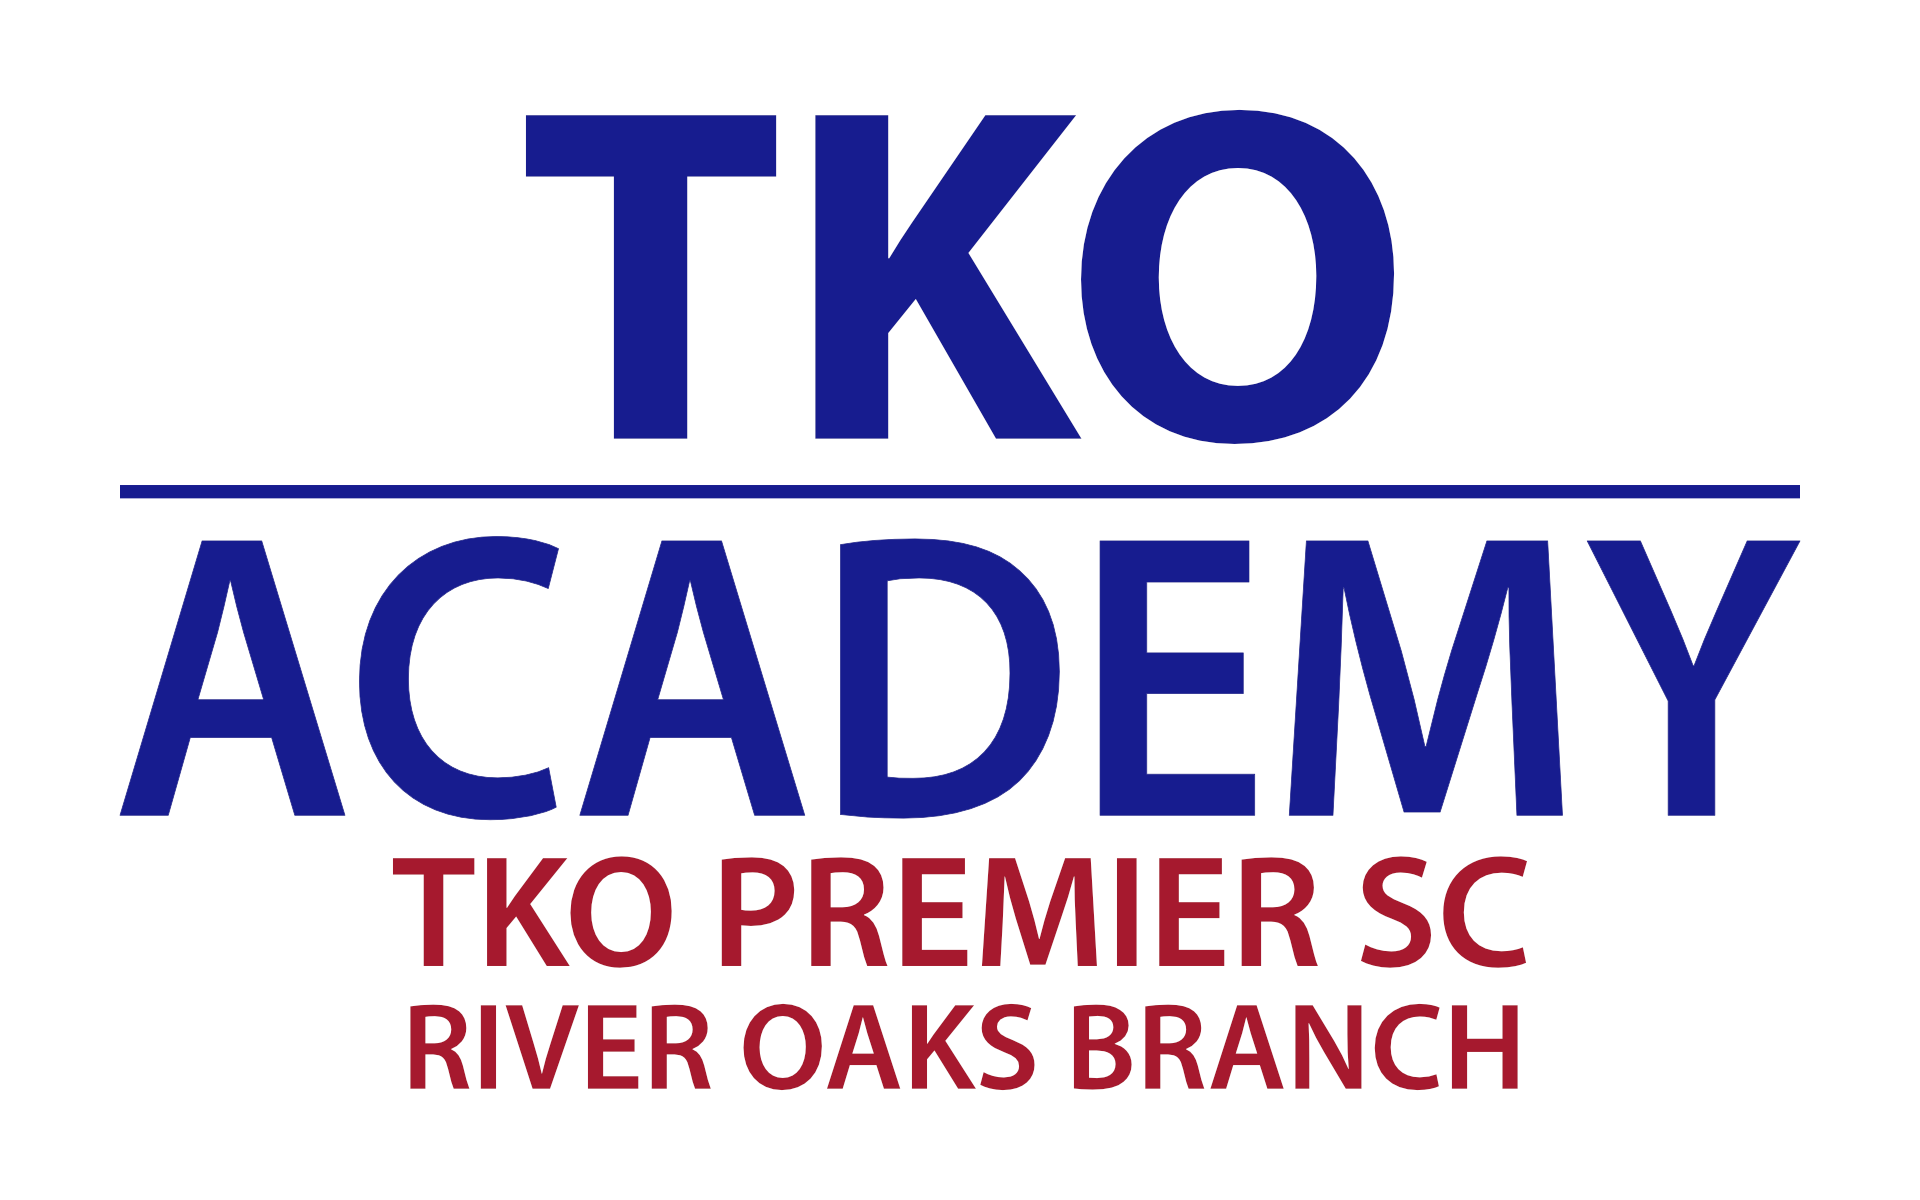 Premier Academy - Final - River Oaks